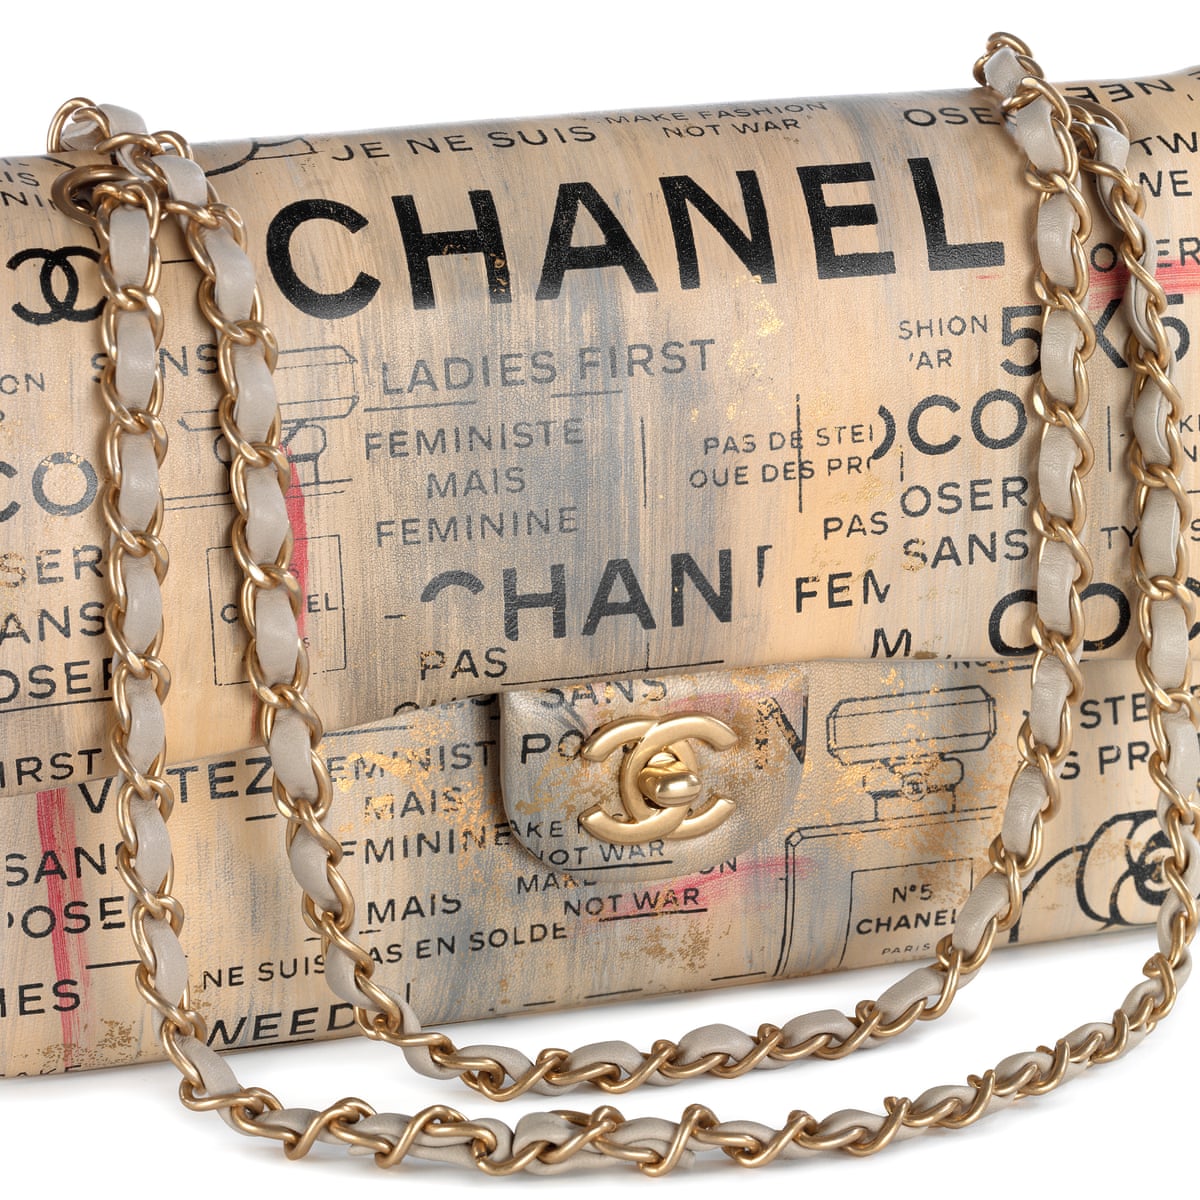 Will a Chanel Handbag Shortage Only Fuel Demand?